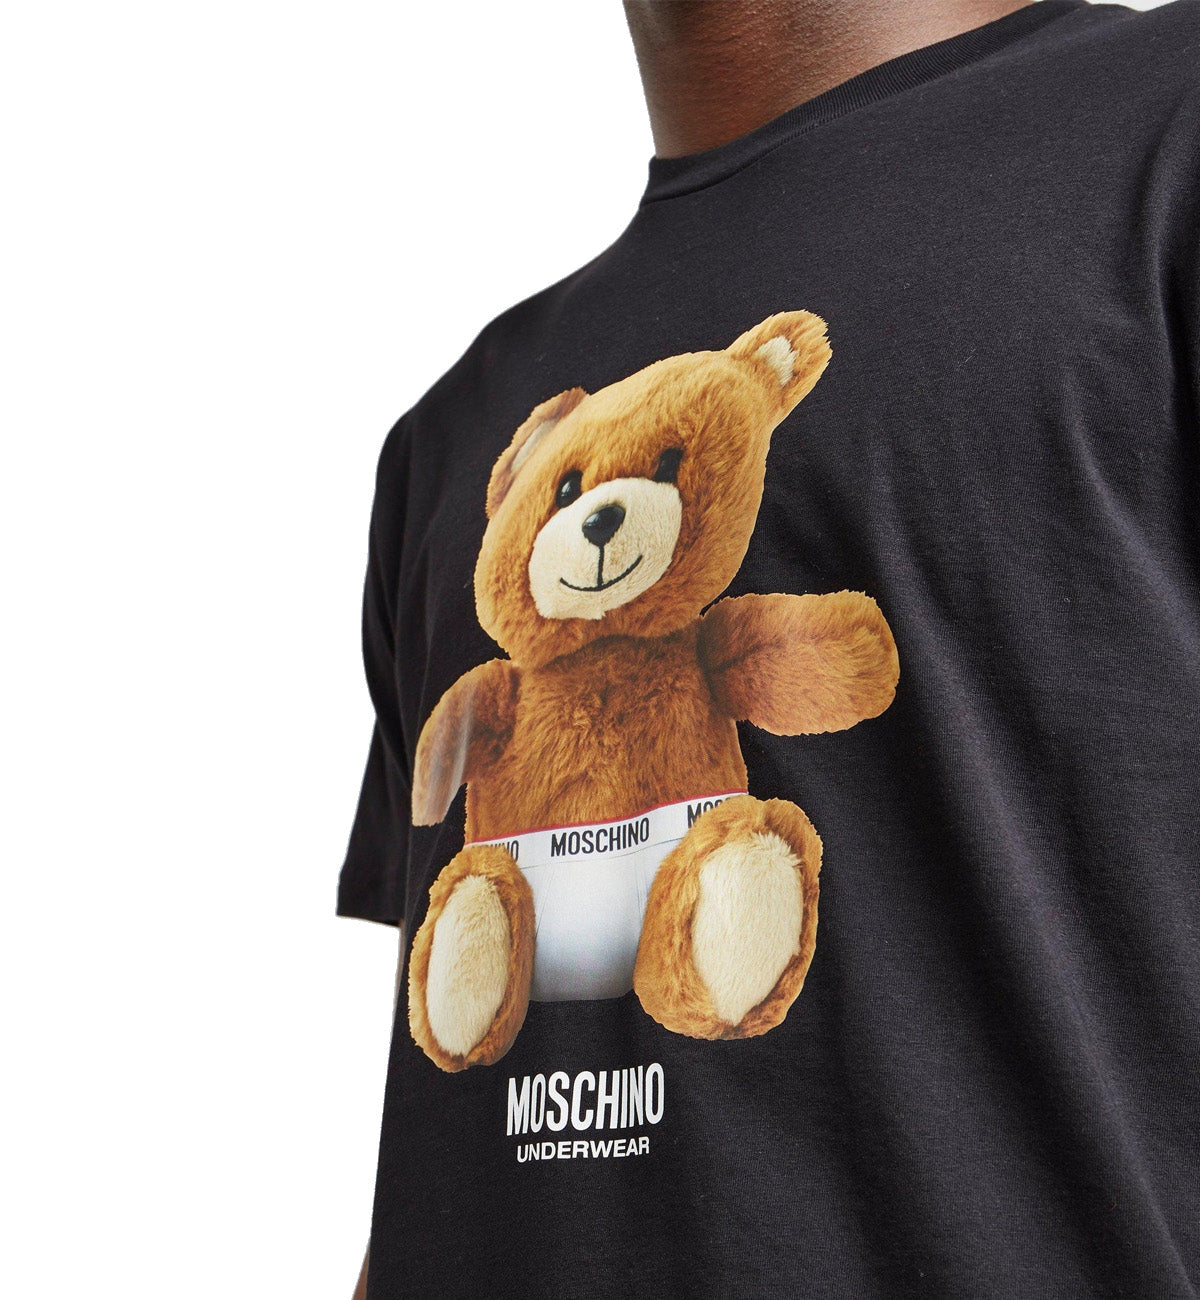 Moschino Underwear Bear T-Shirt (Black)